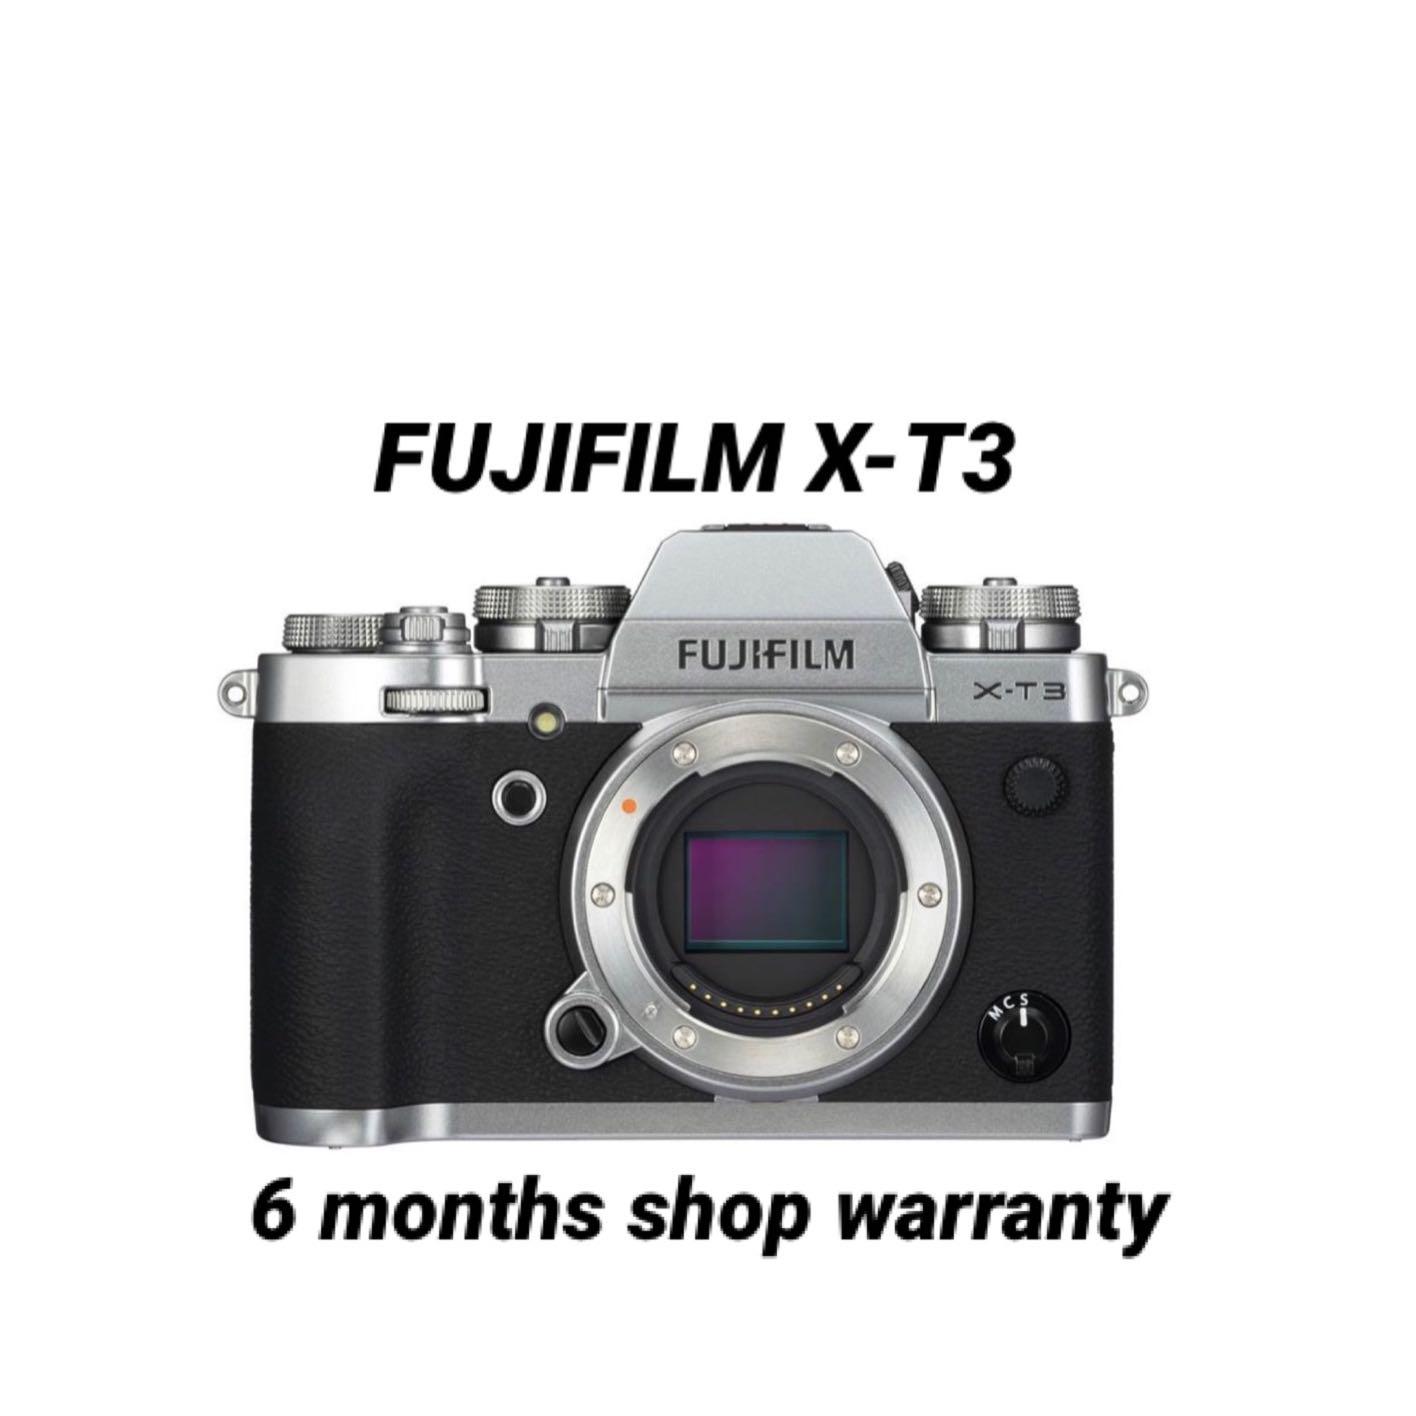 Sale Fujifilm X T3 Tag Fuji Xt3 X T3 Photography Cameras Mirrorless On Carousell